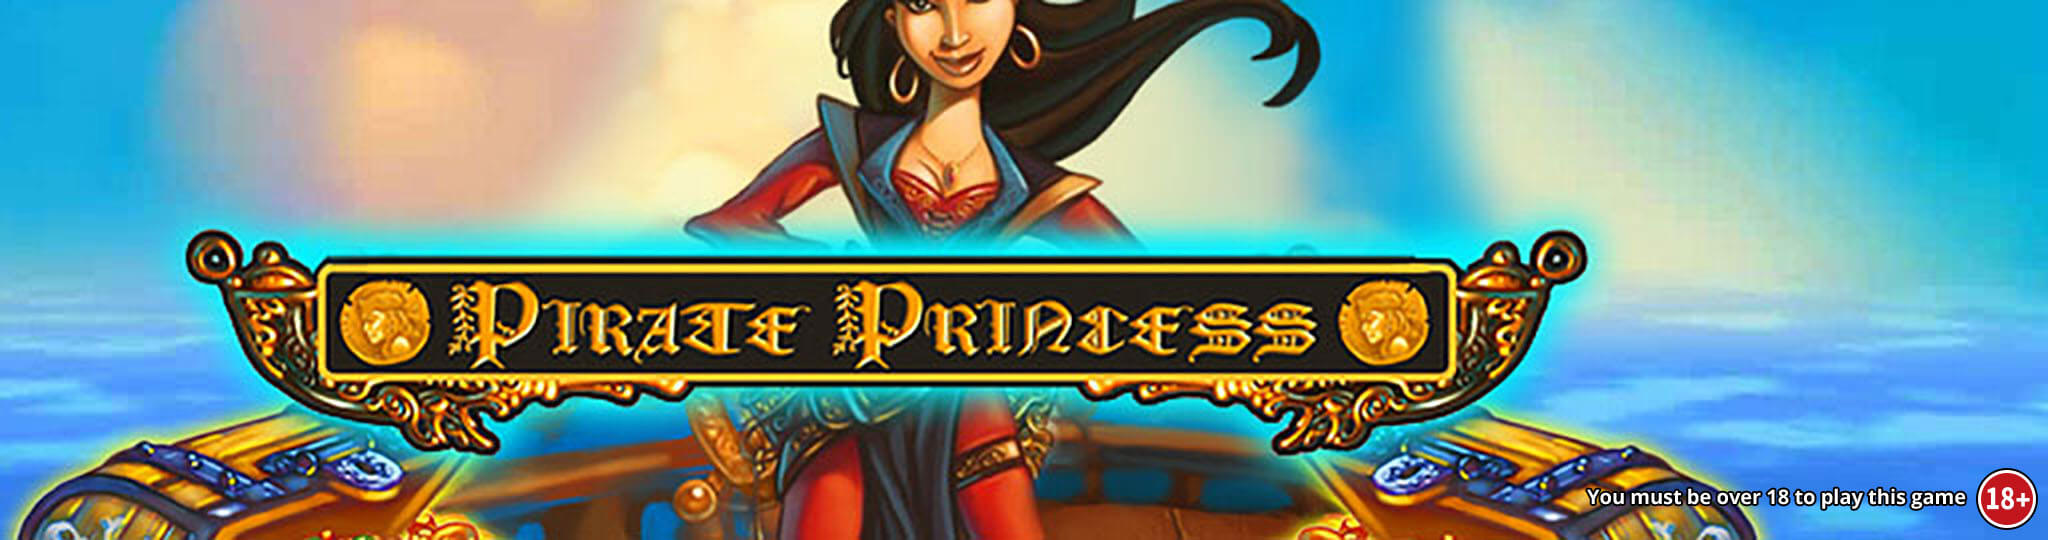 Pirate Princess Review